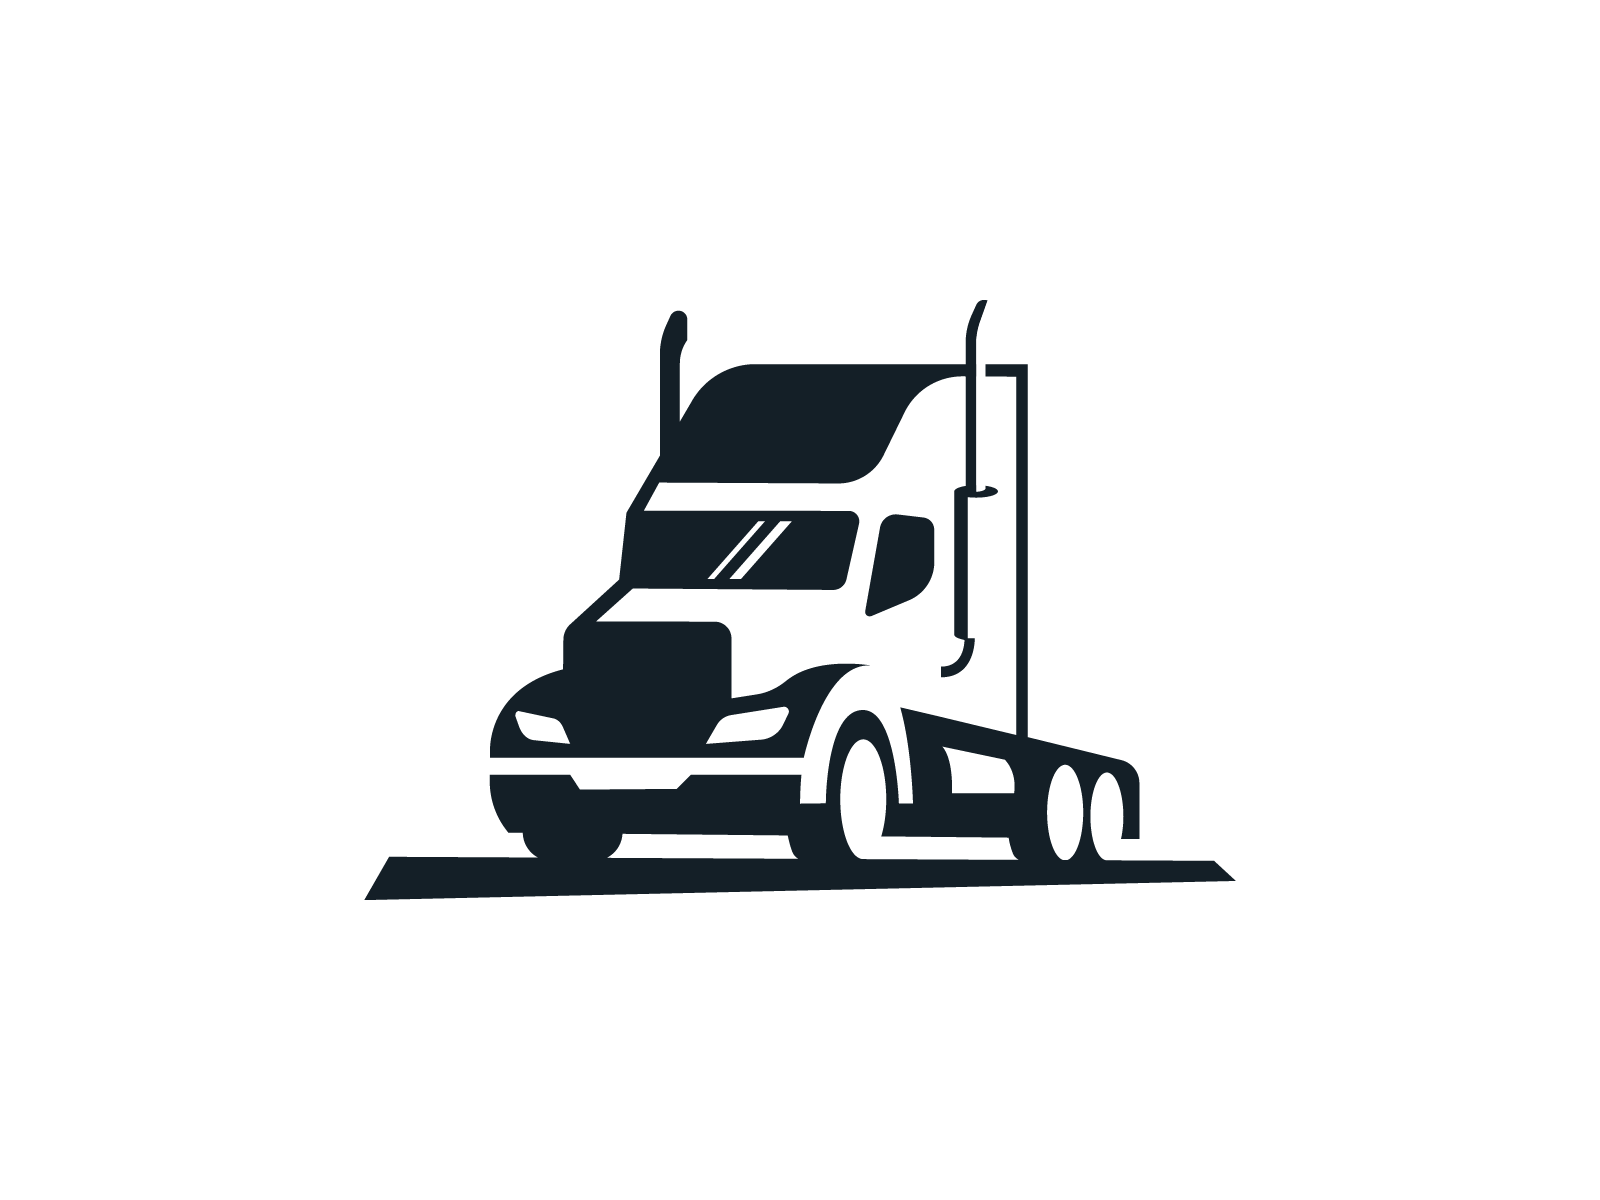 truck logo design chevy truck